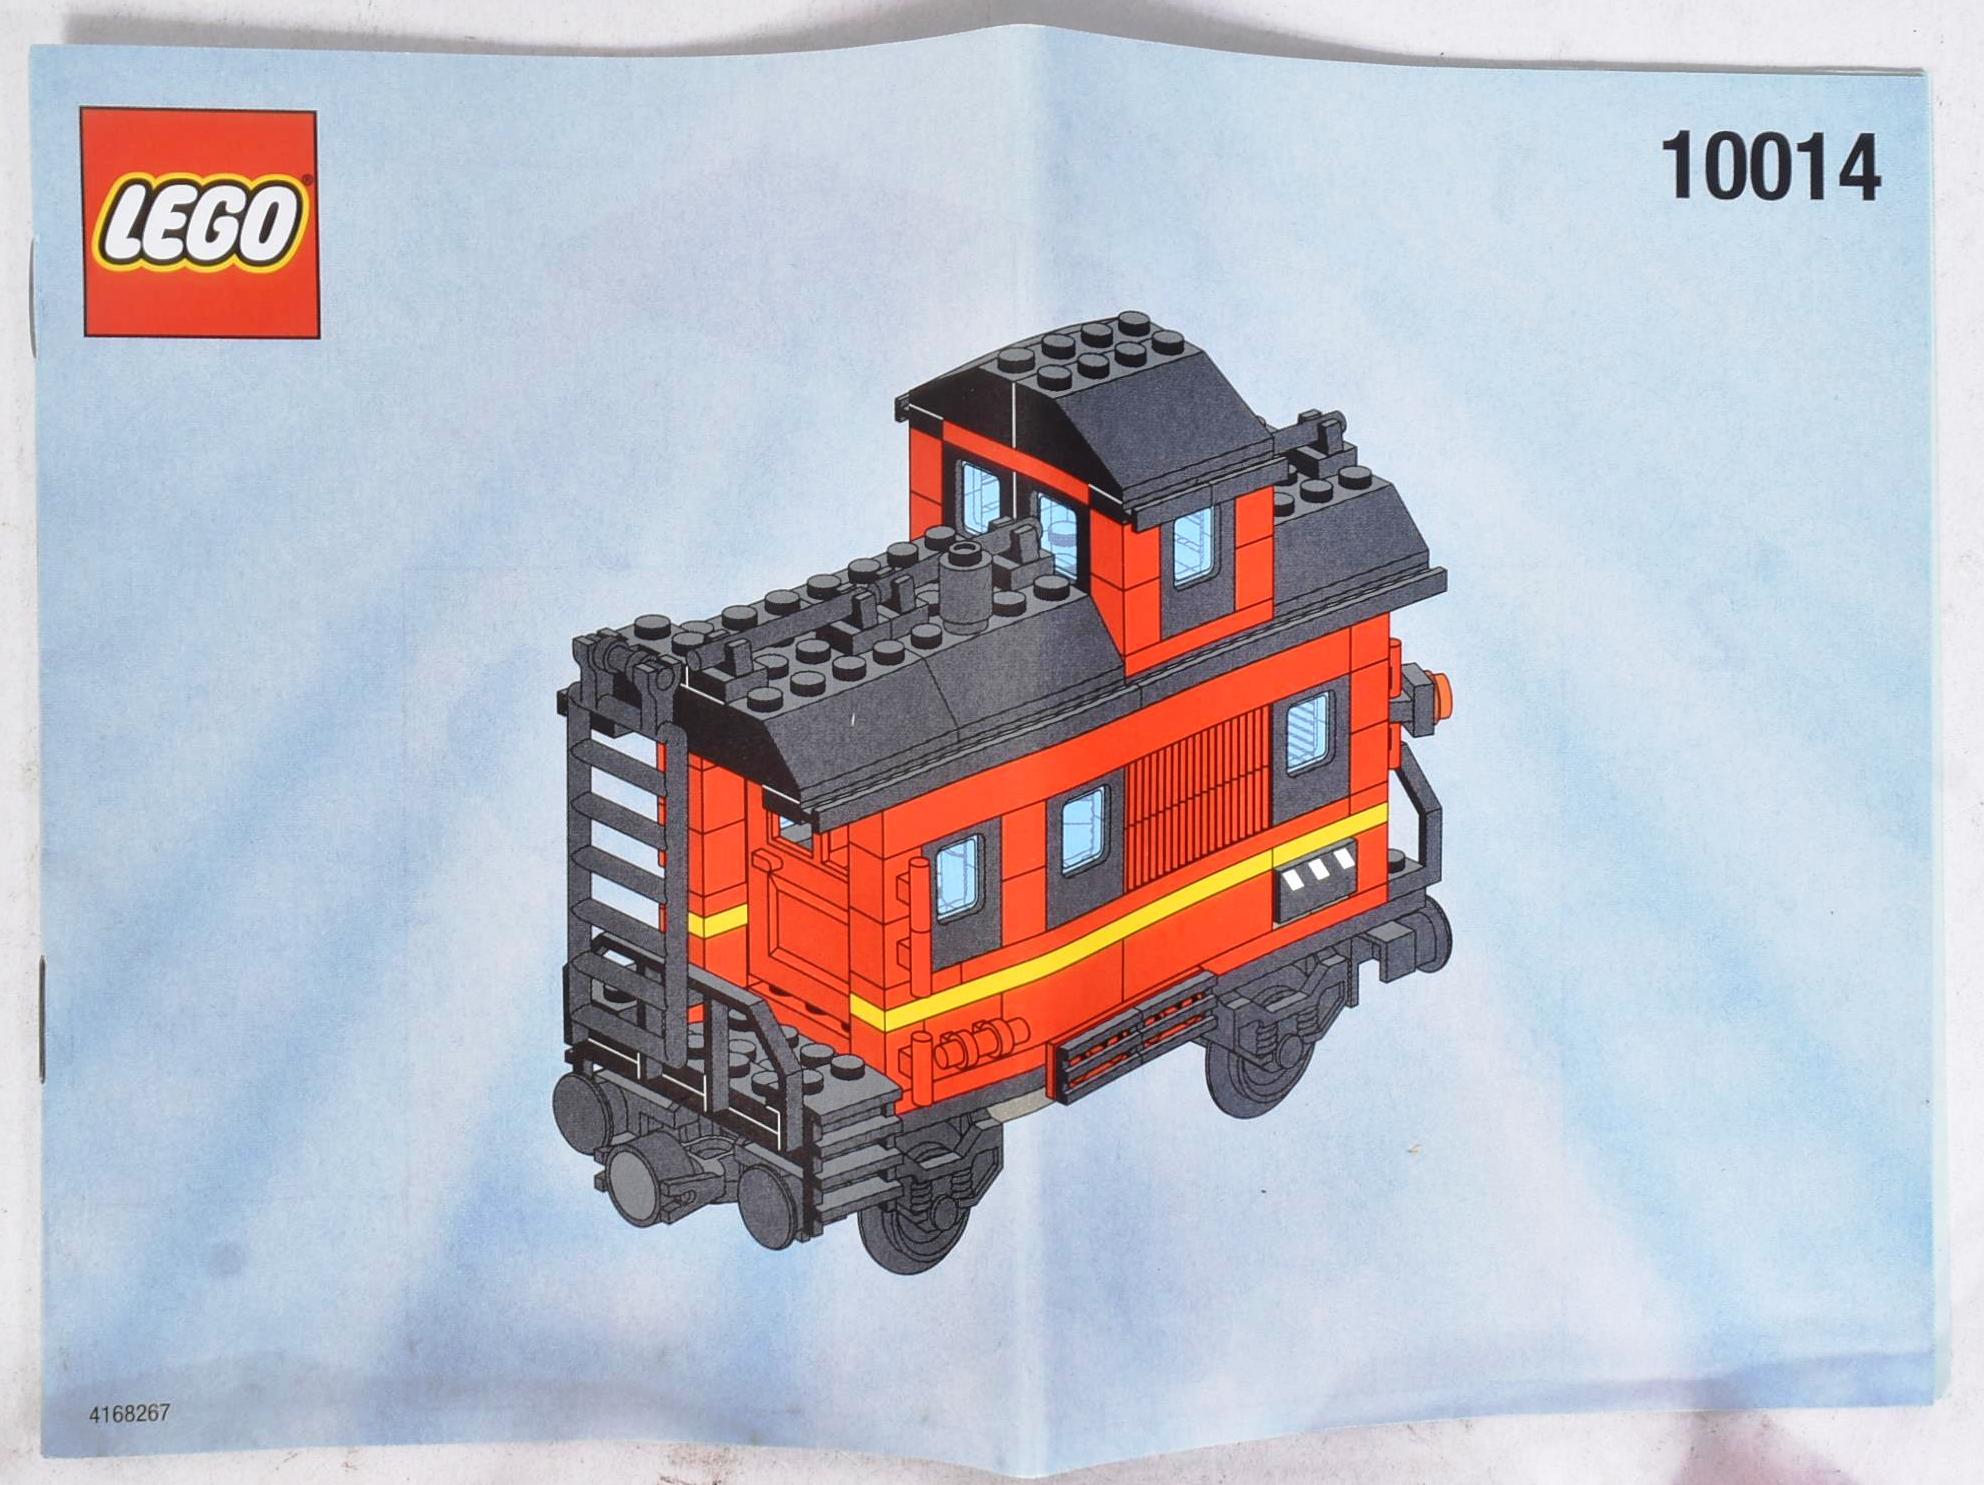 LEGO - TRAINS - 10014 - CABOOSE - Image 3 of 4